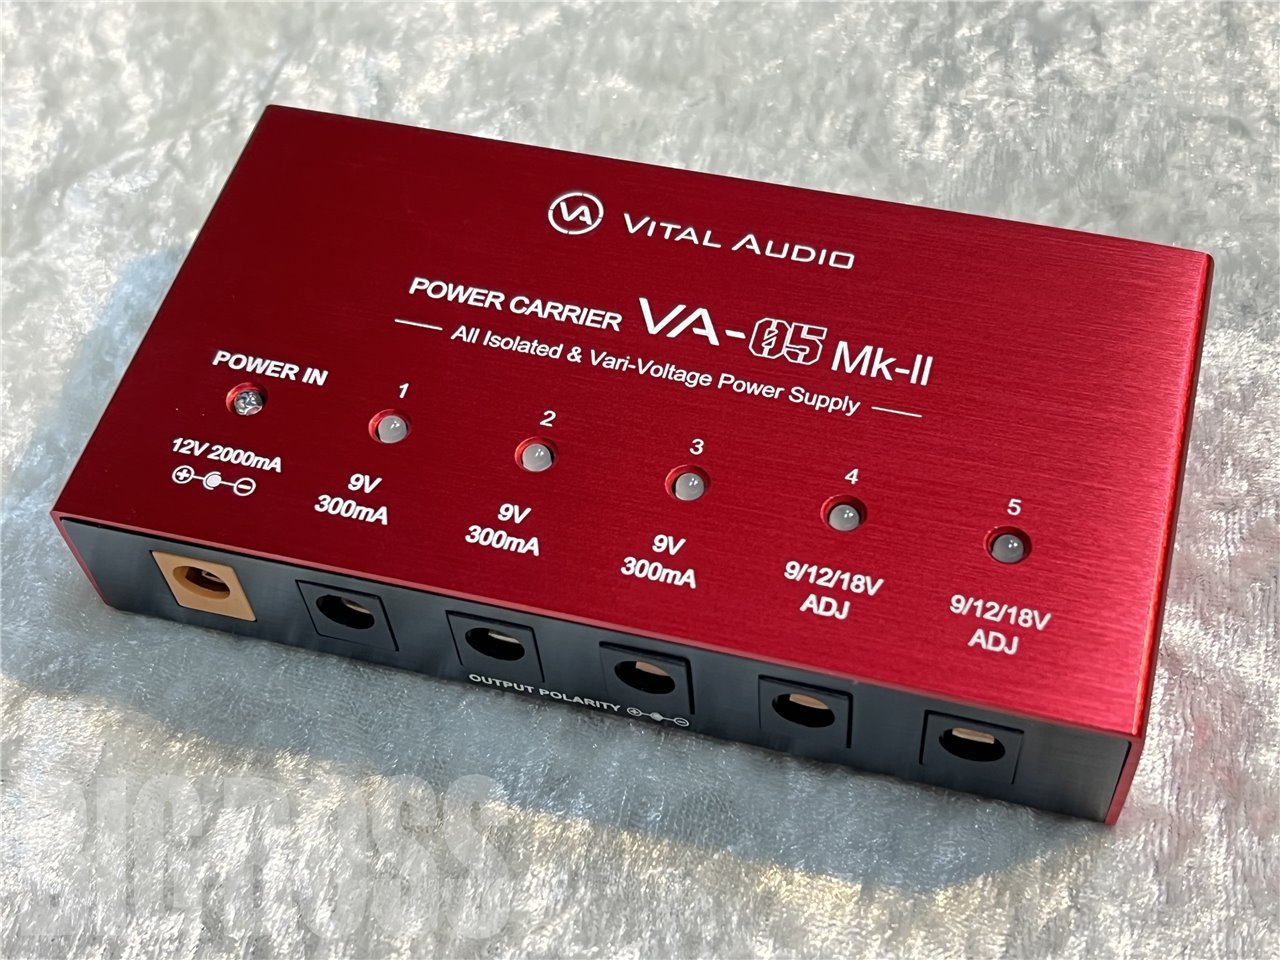 vital audio POWER CARRIER VA-05 MKII